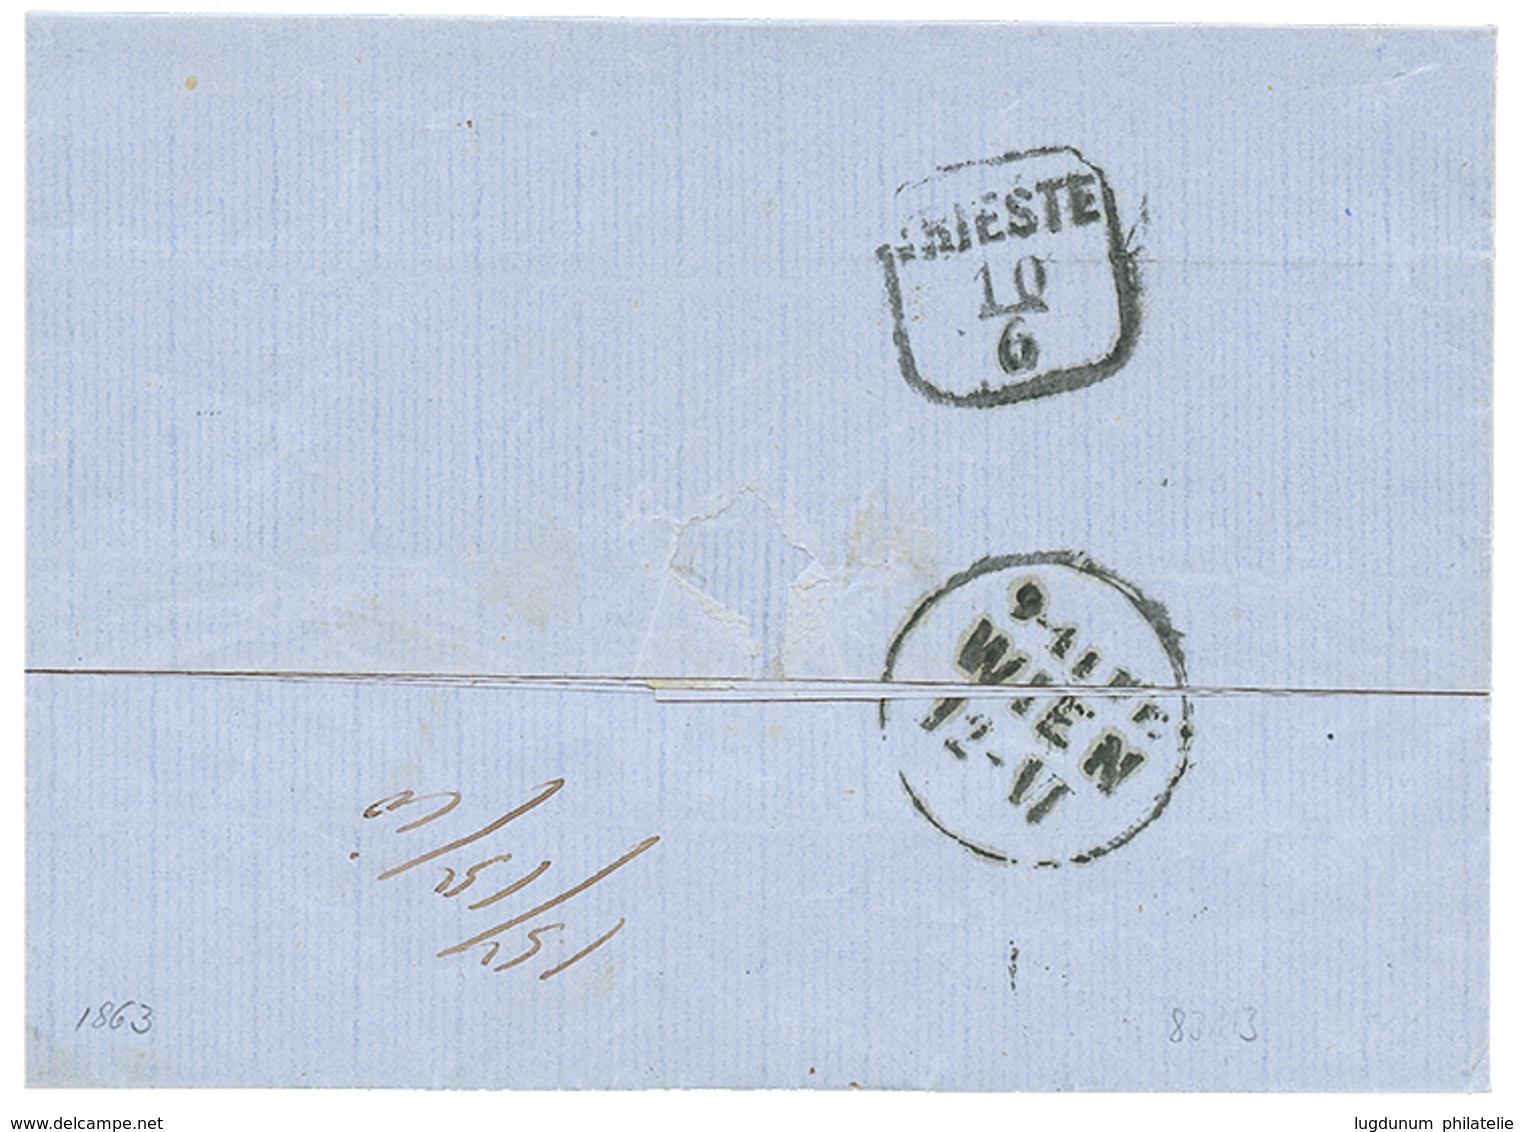 479 "JANINA" : 1863 JANINA + FRANCO On Entire Letter To VIENNA. Superb. - Eastern Austria